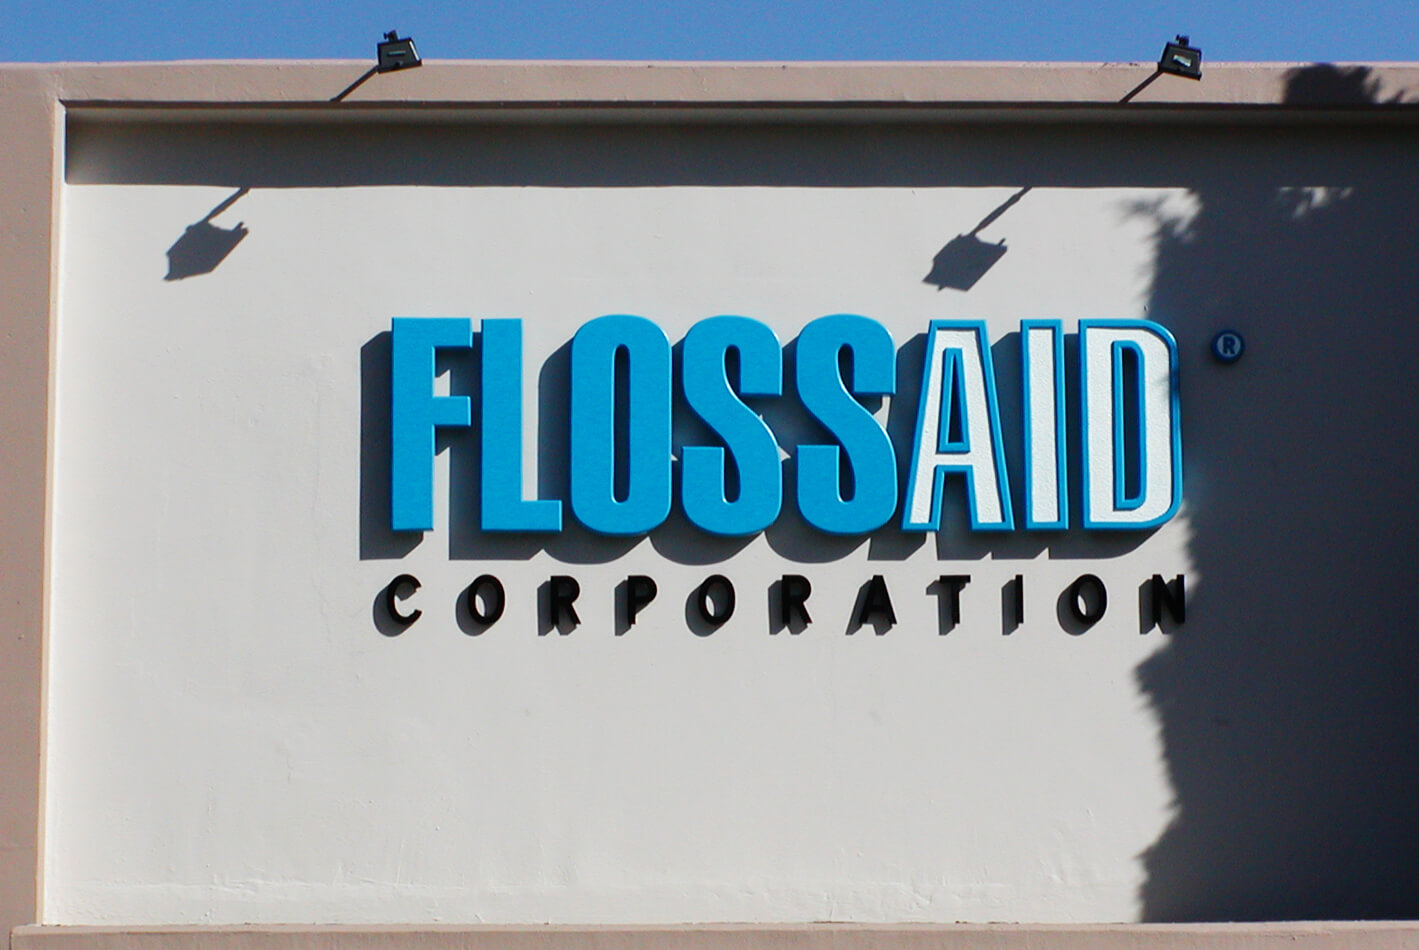 Santa Clara dimensional letters sign flossaid corporation monument